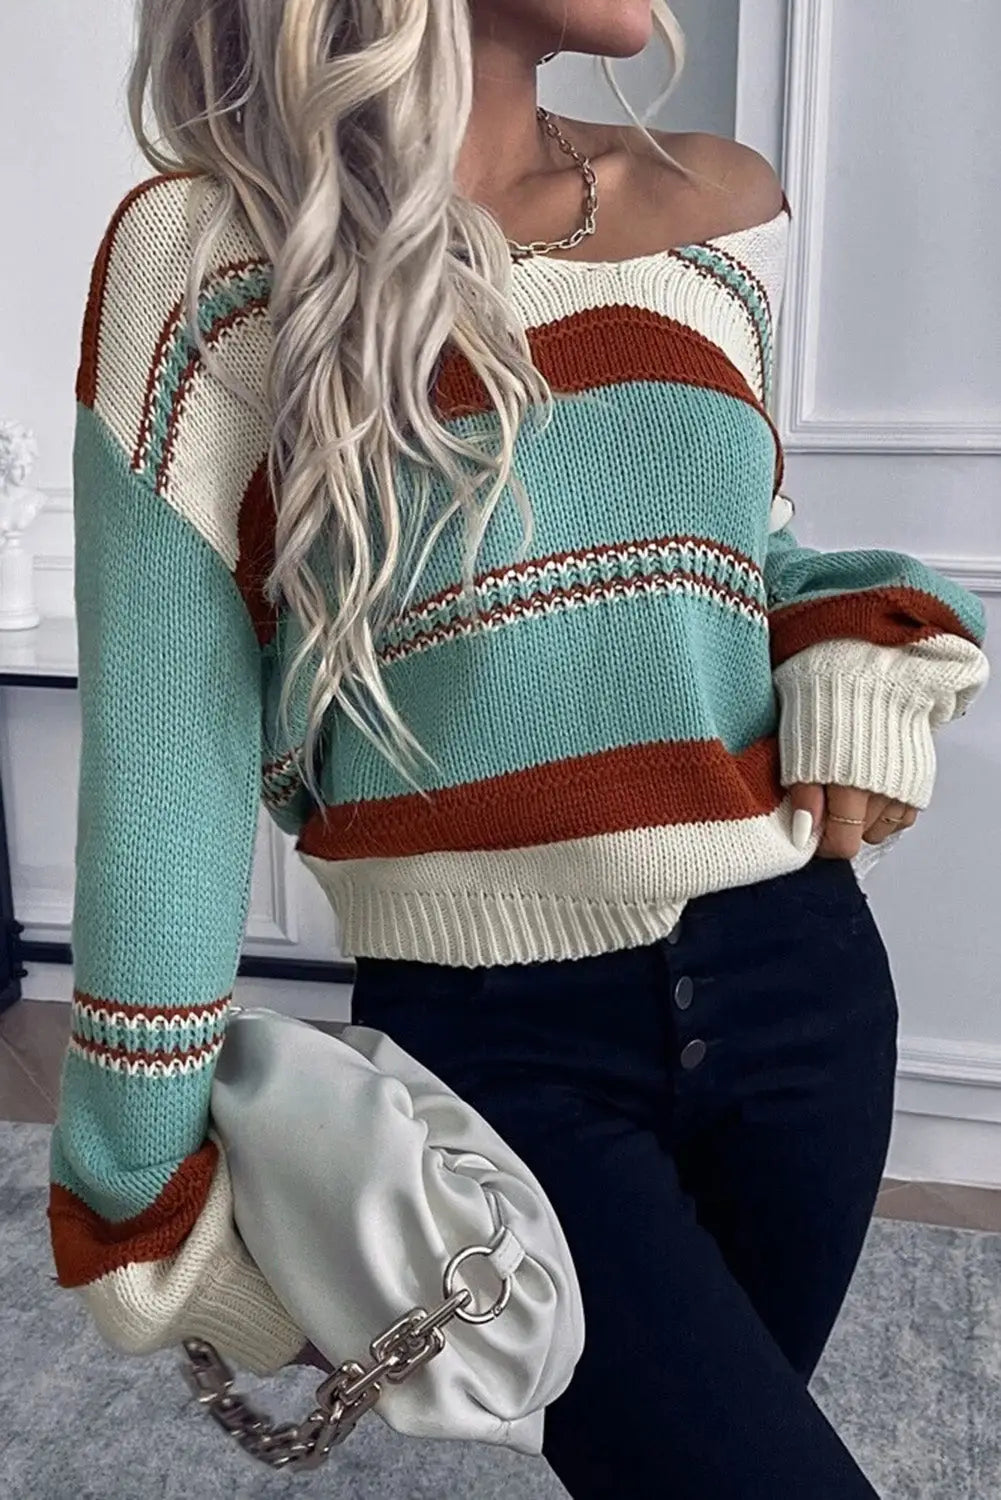 Sky blue striped pattern knit v neck sweater - sweaters & cardigans